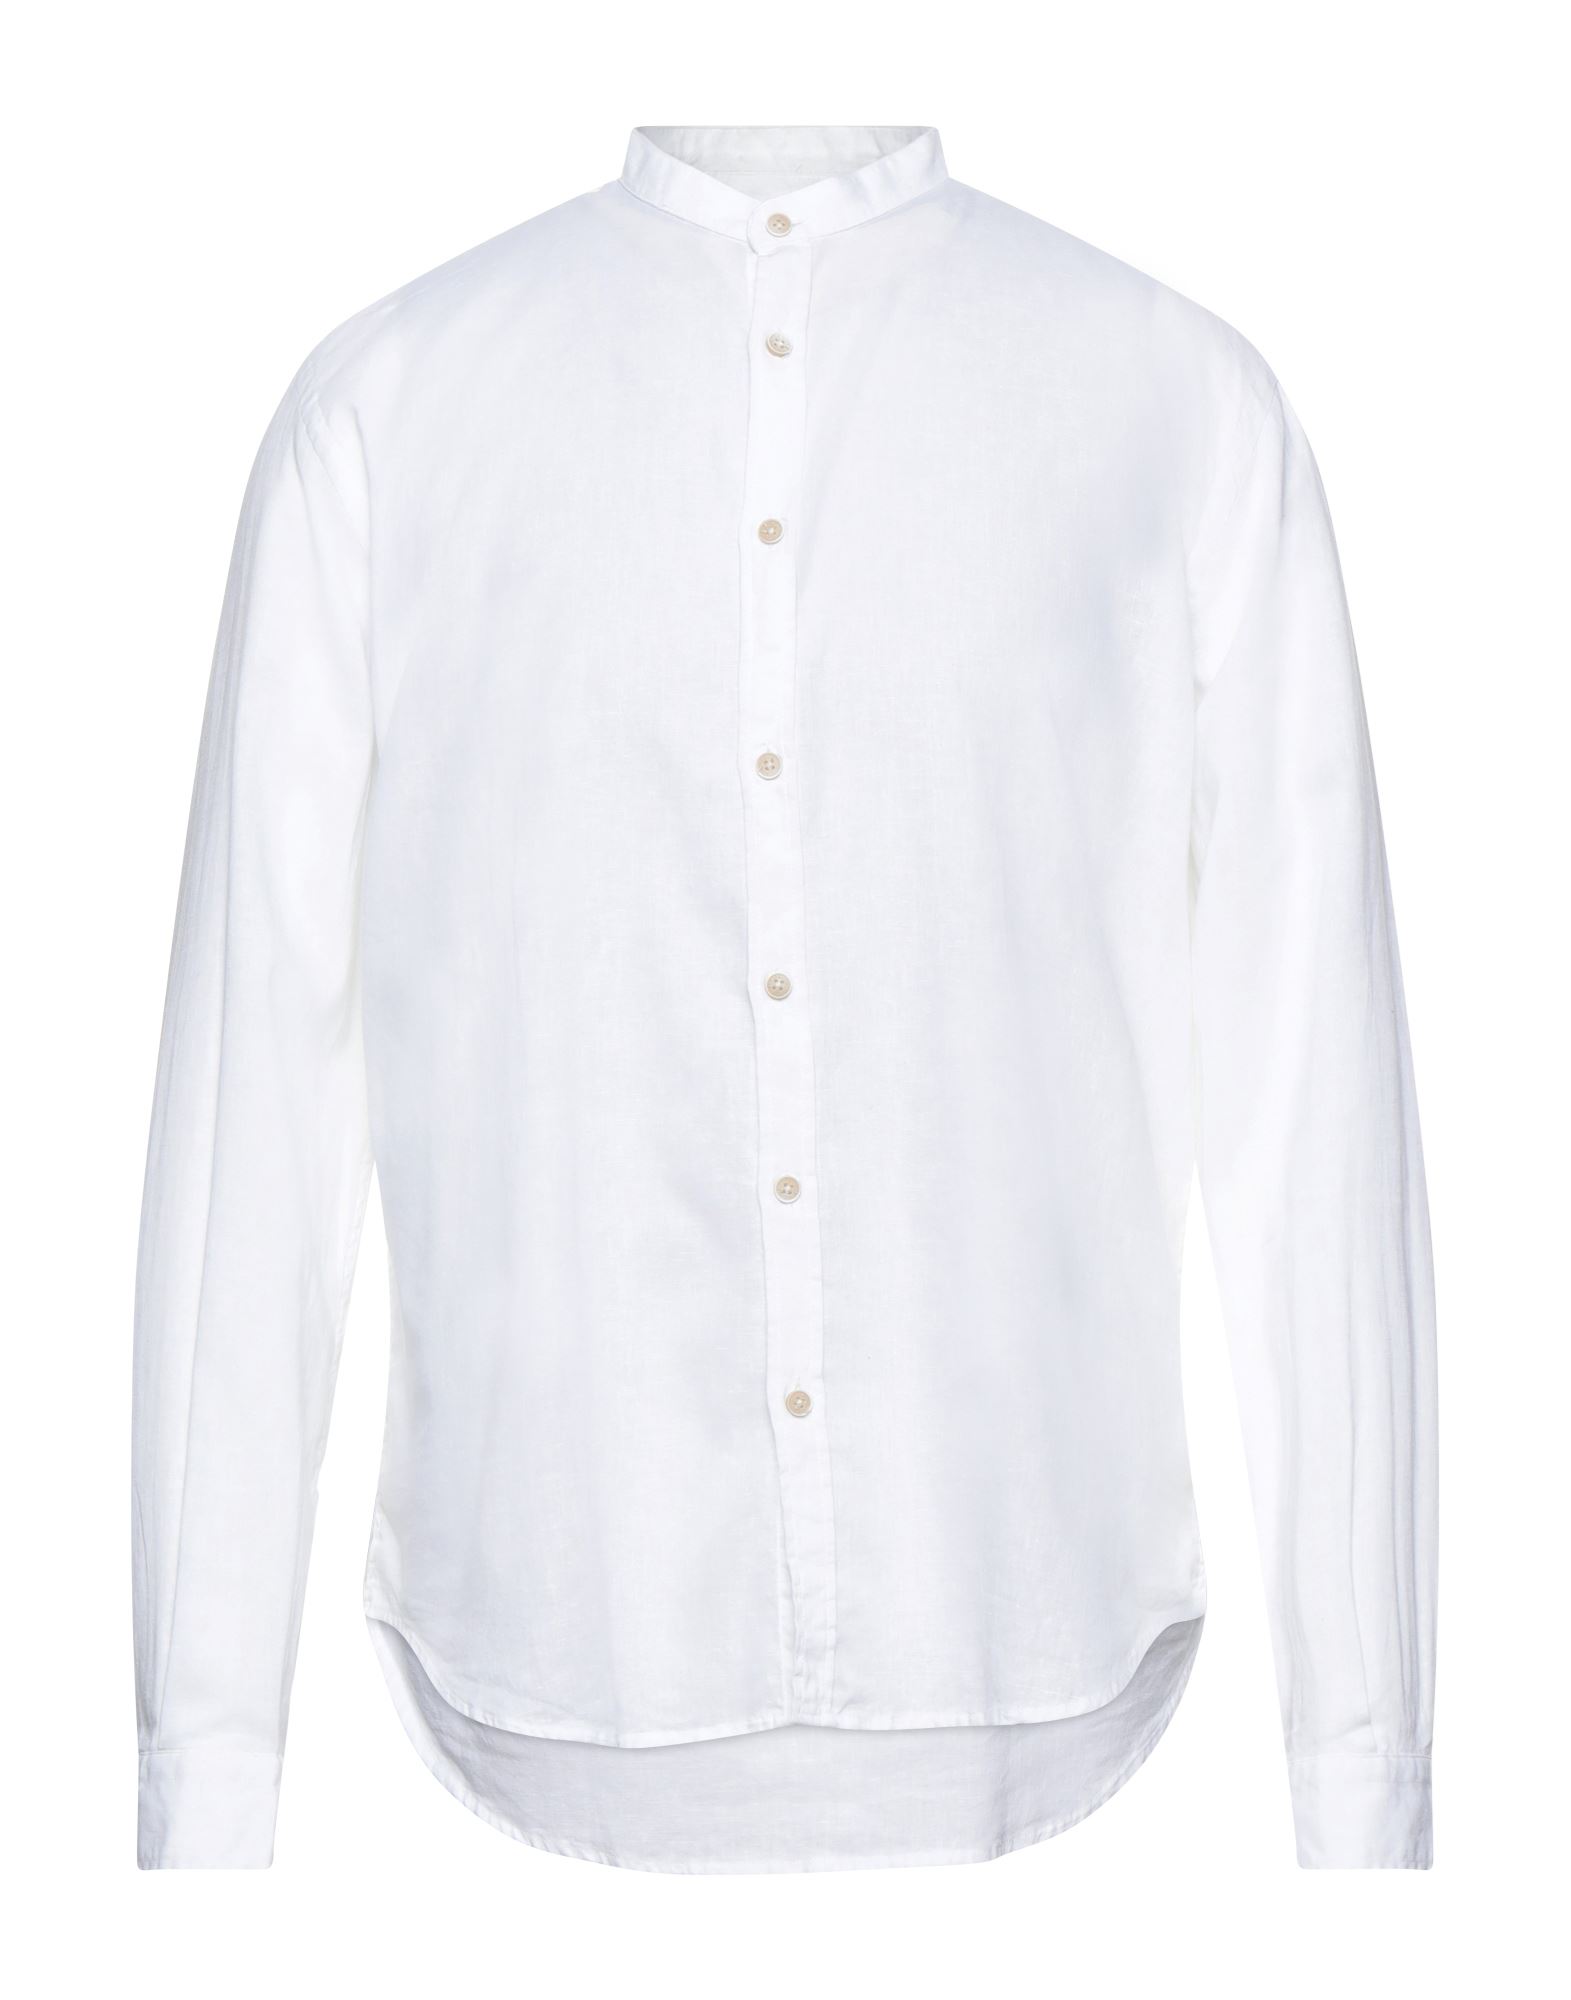 Shop Bomboogie Man Shirt White Size Xxl Linen, Cotton